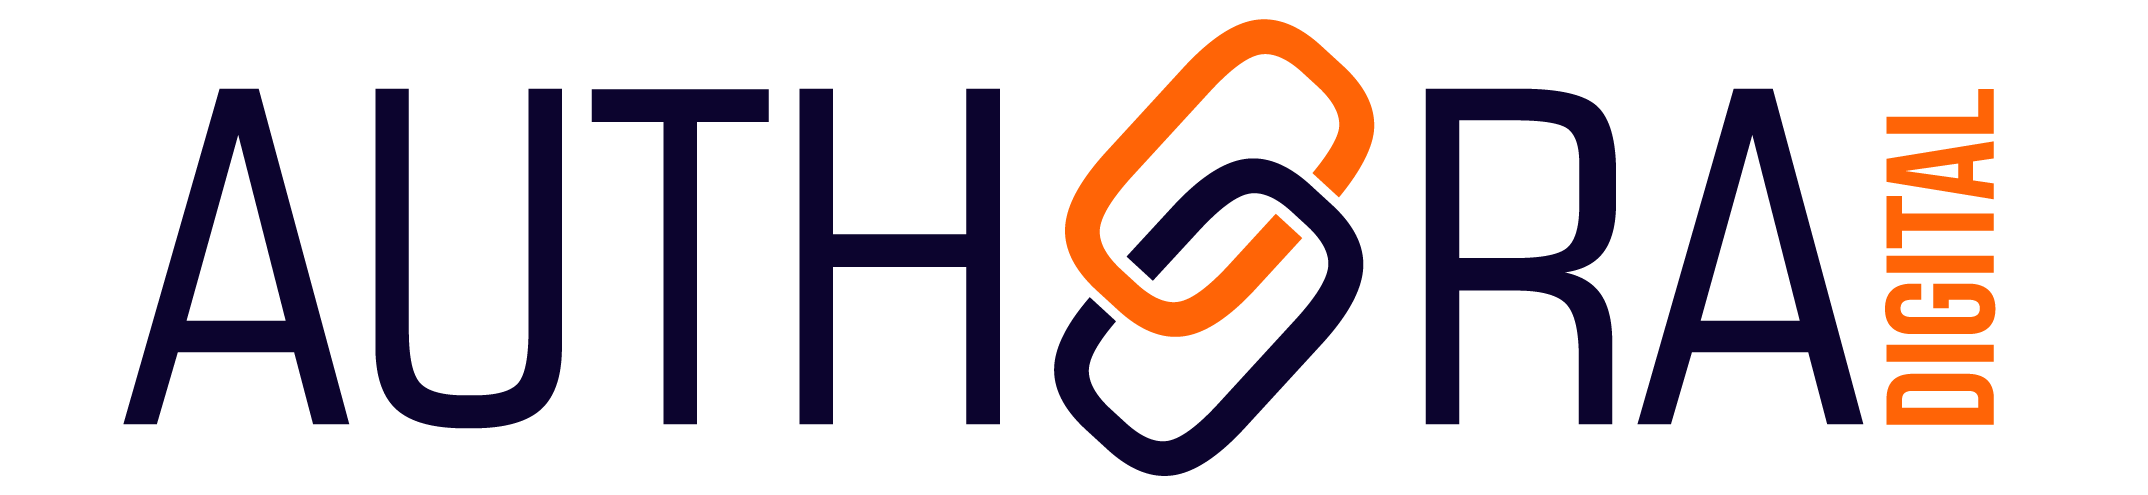 authora-logo (1)